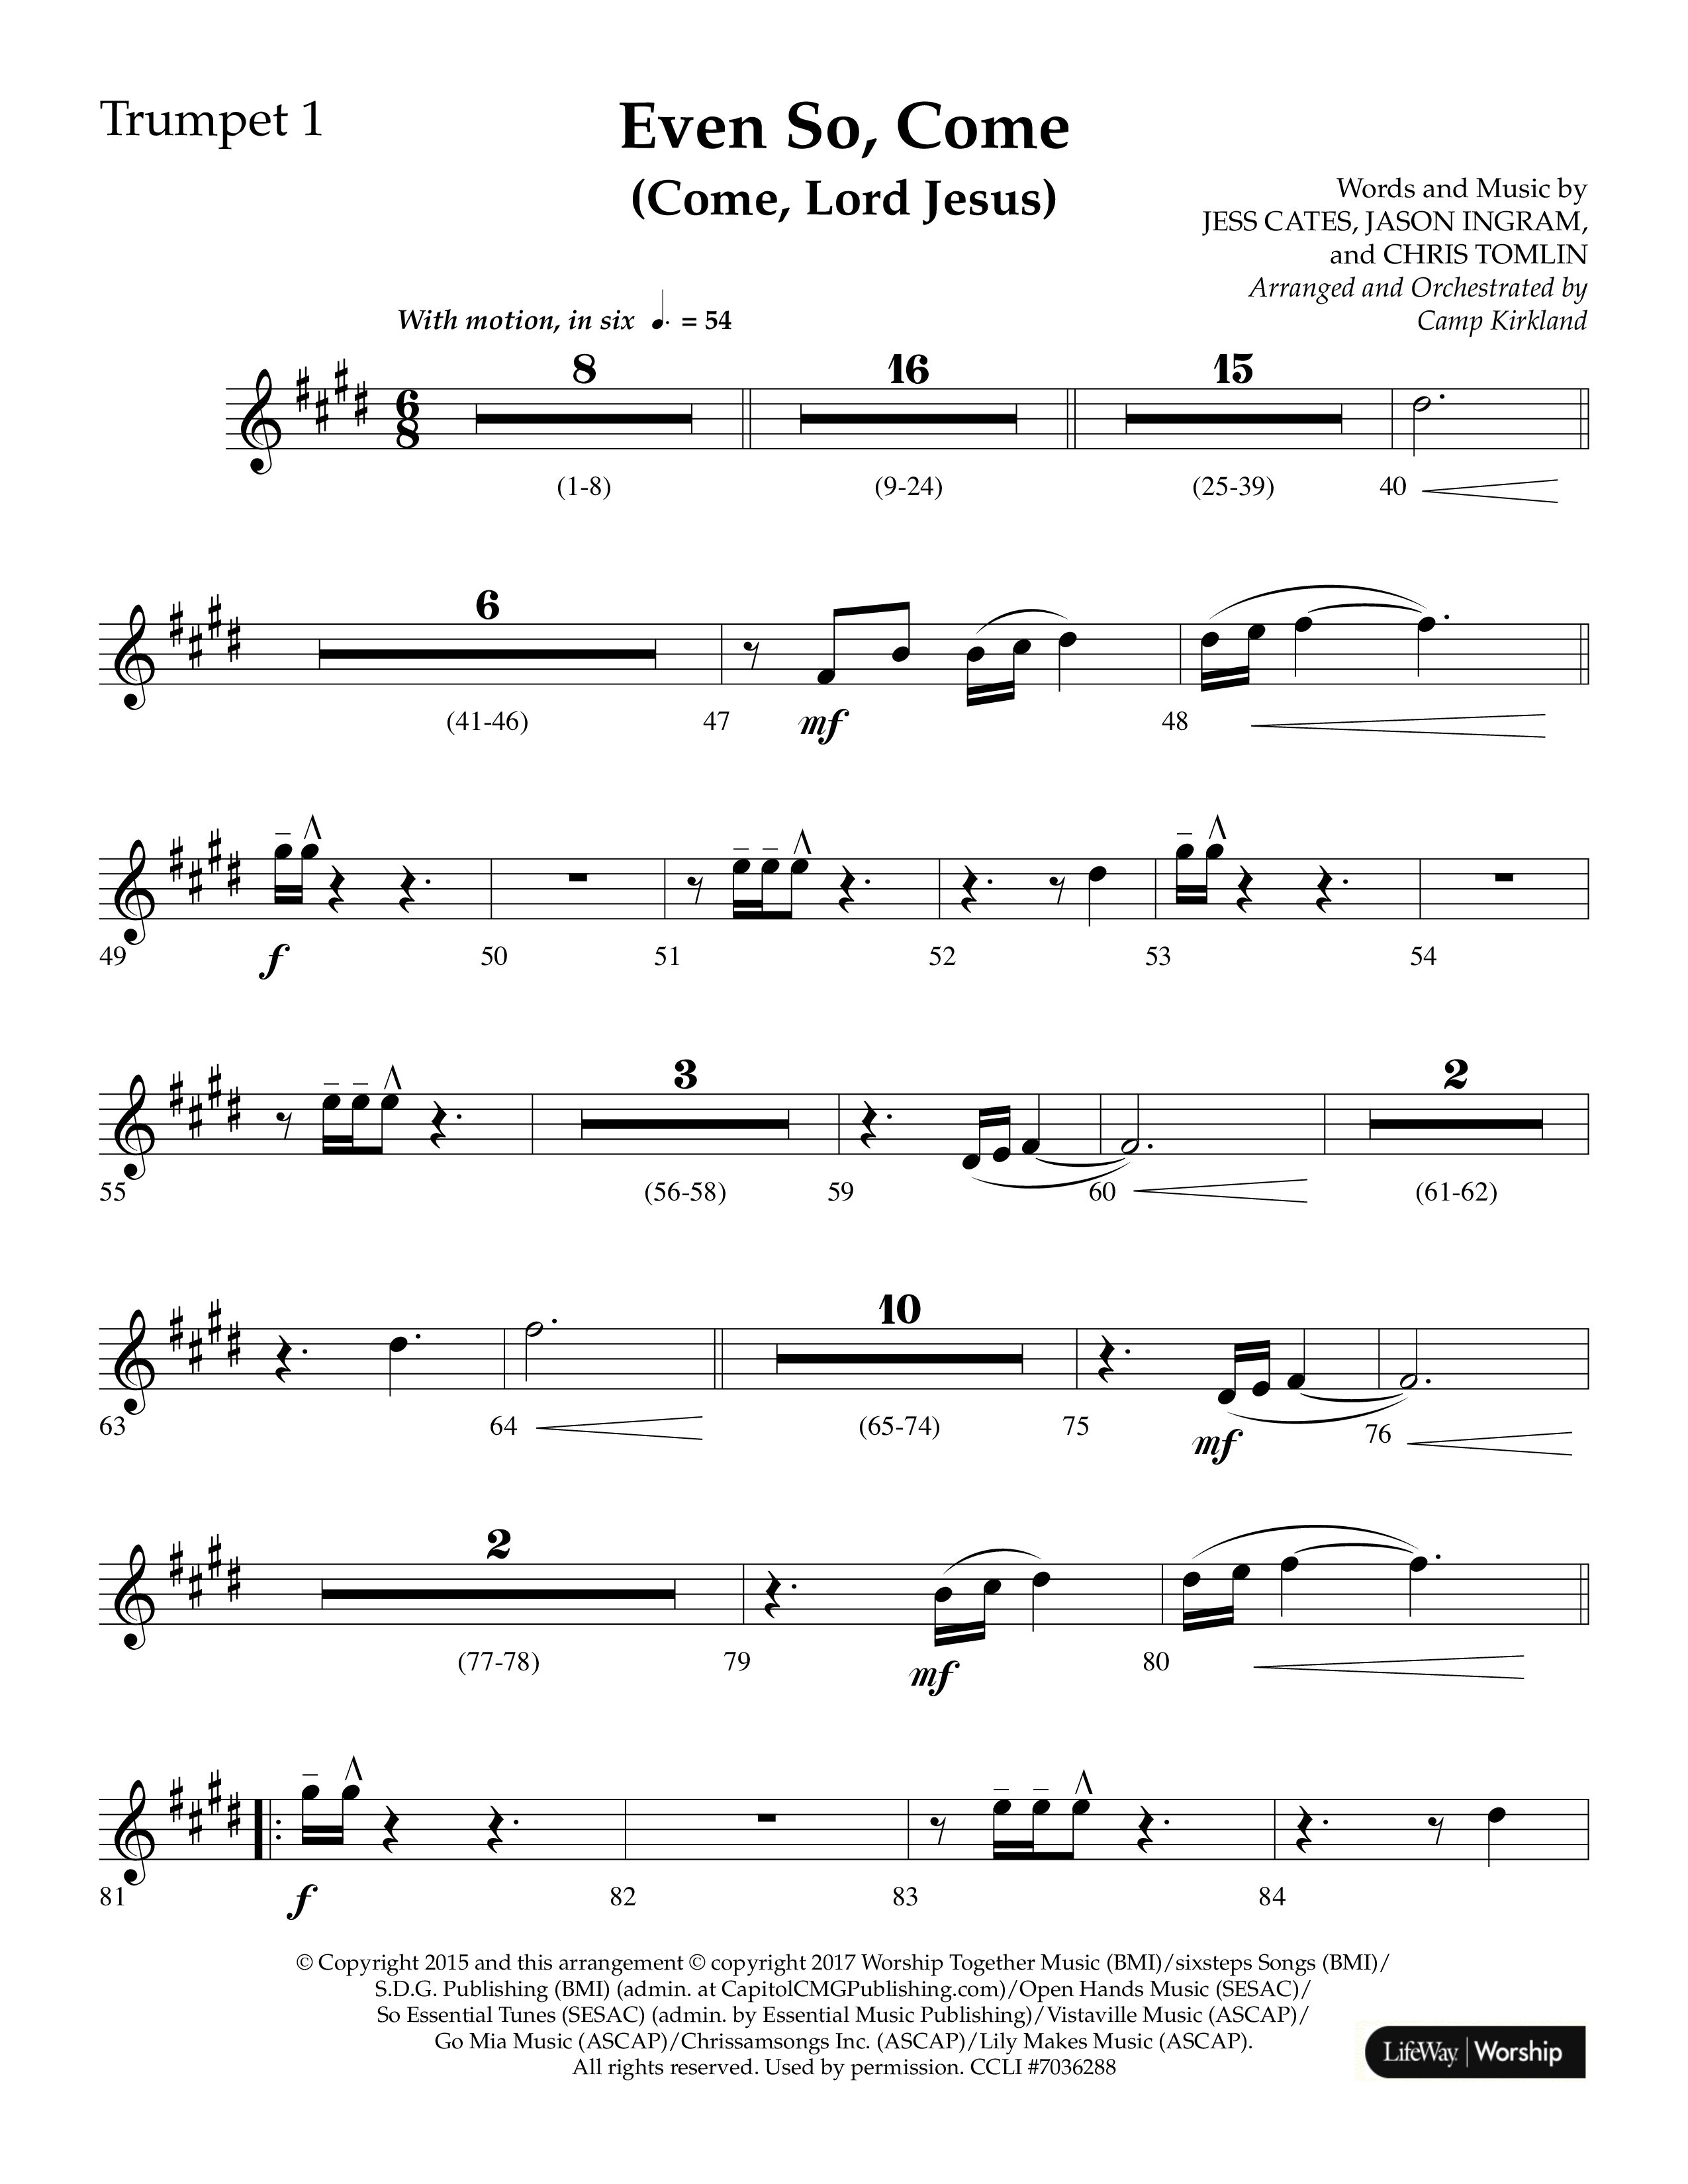 Even So Come (Choral Anthem SATB) Trumpet 1 (Lifeway Choral / Arr. Camp Kirkland)